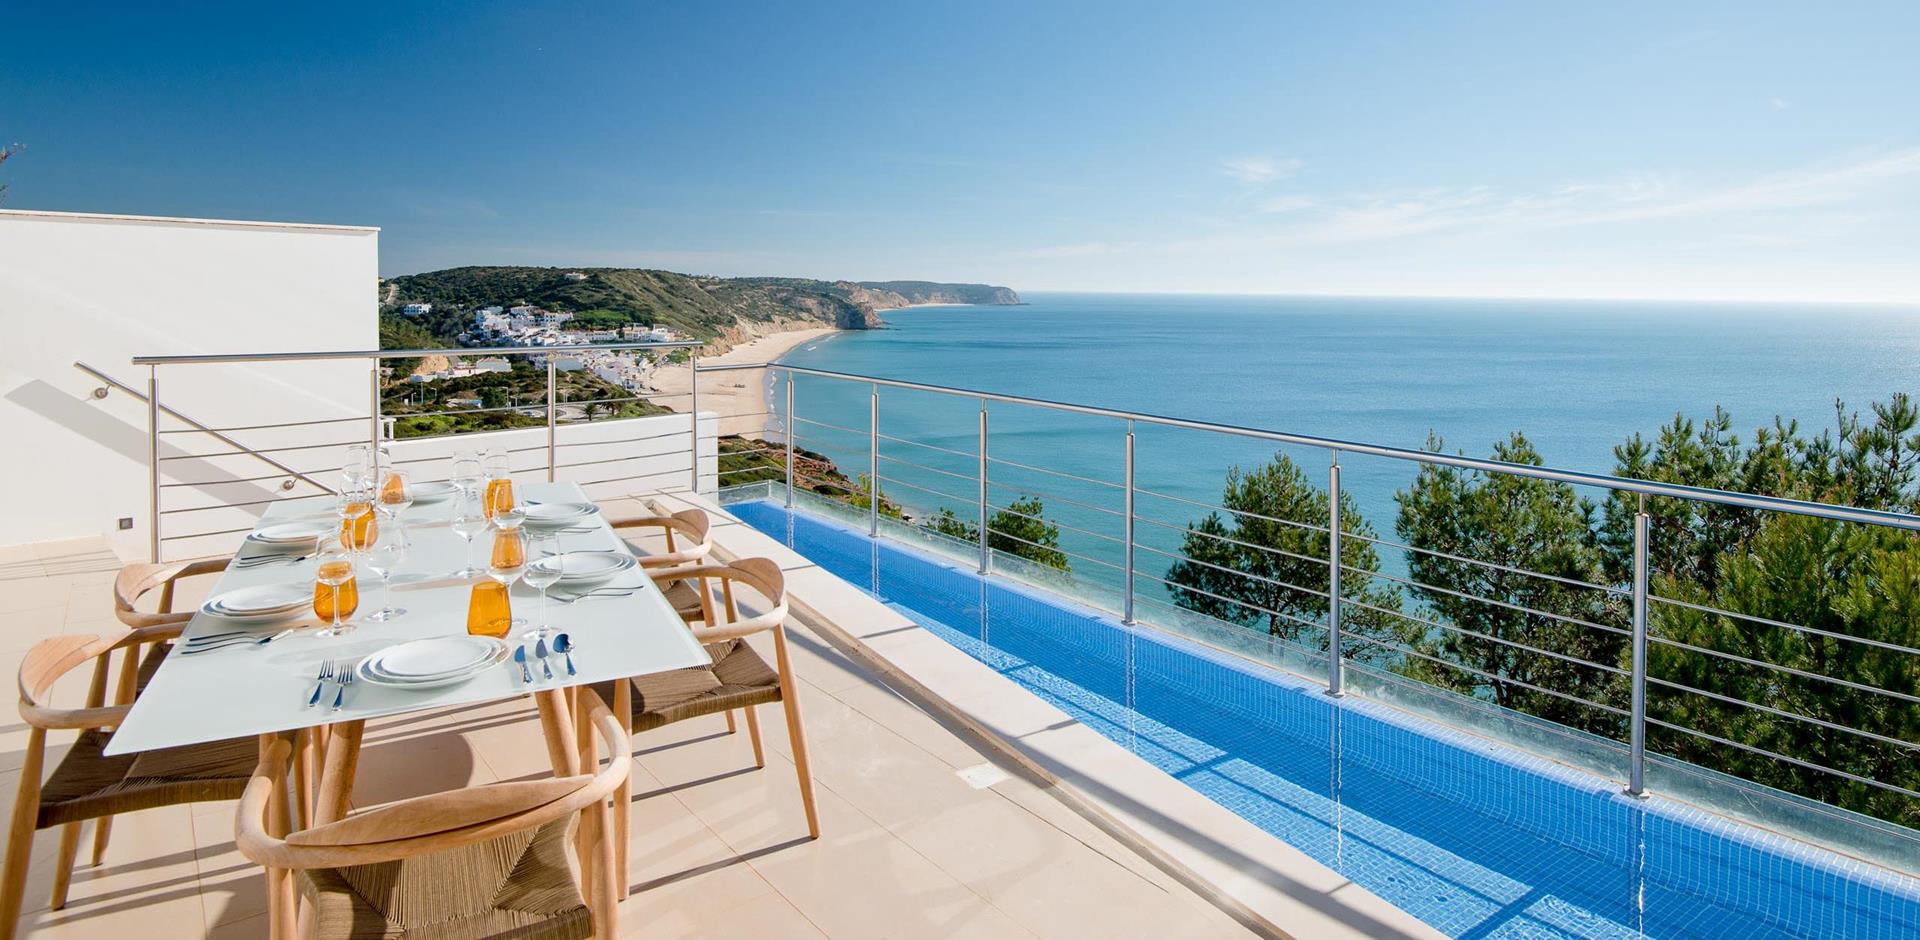 Views, Villa Ocean Star, Portugal